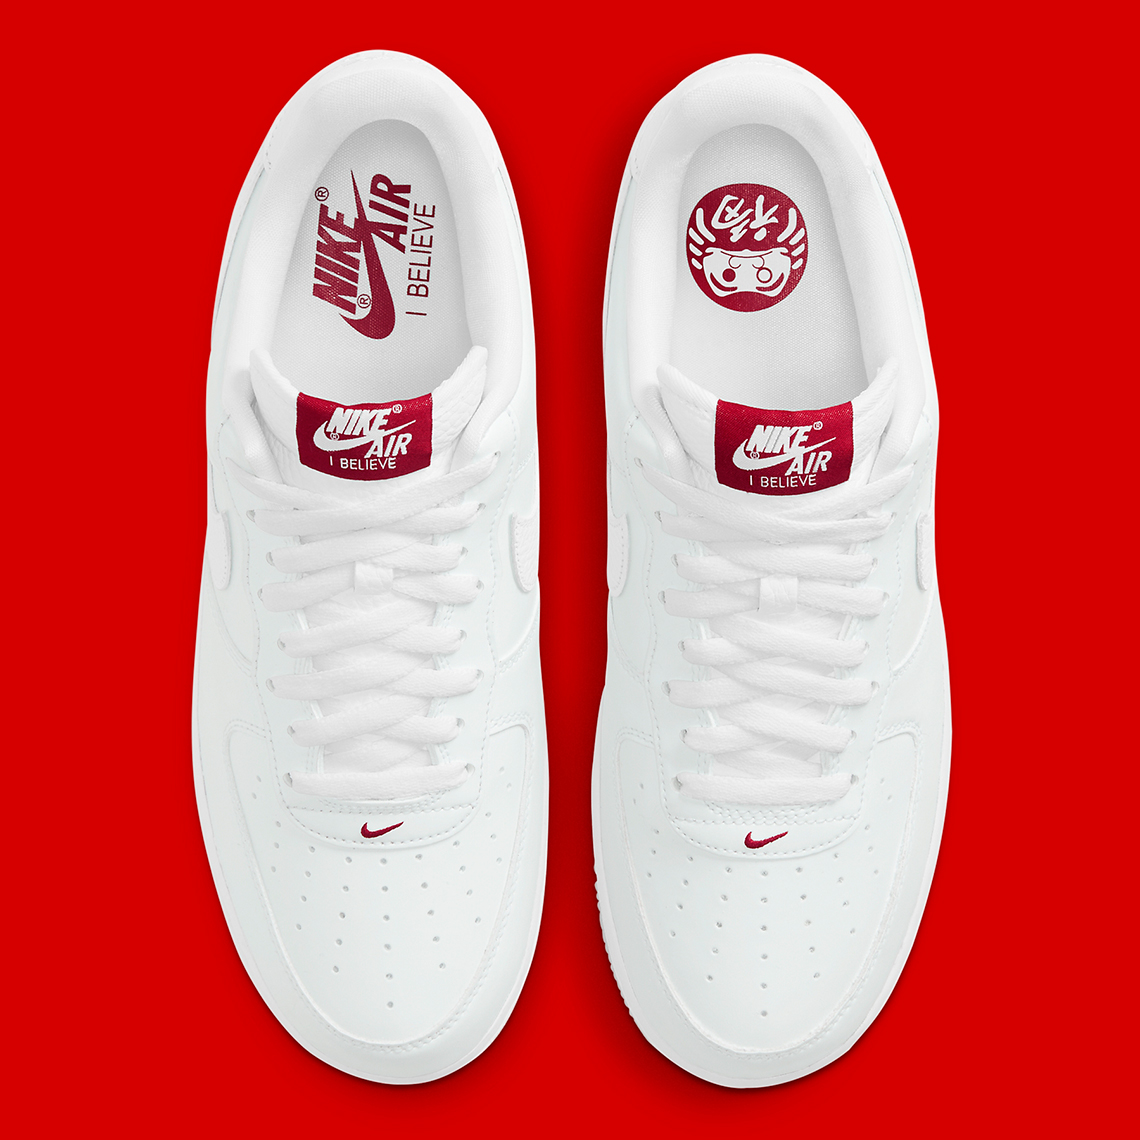 Nike Air Force 1 I Believe DD9941-100 Release Info | SneakerNews.com